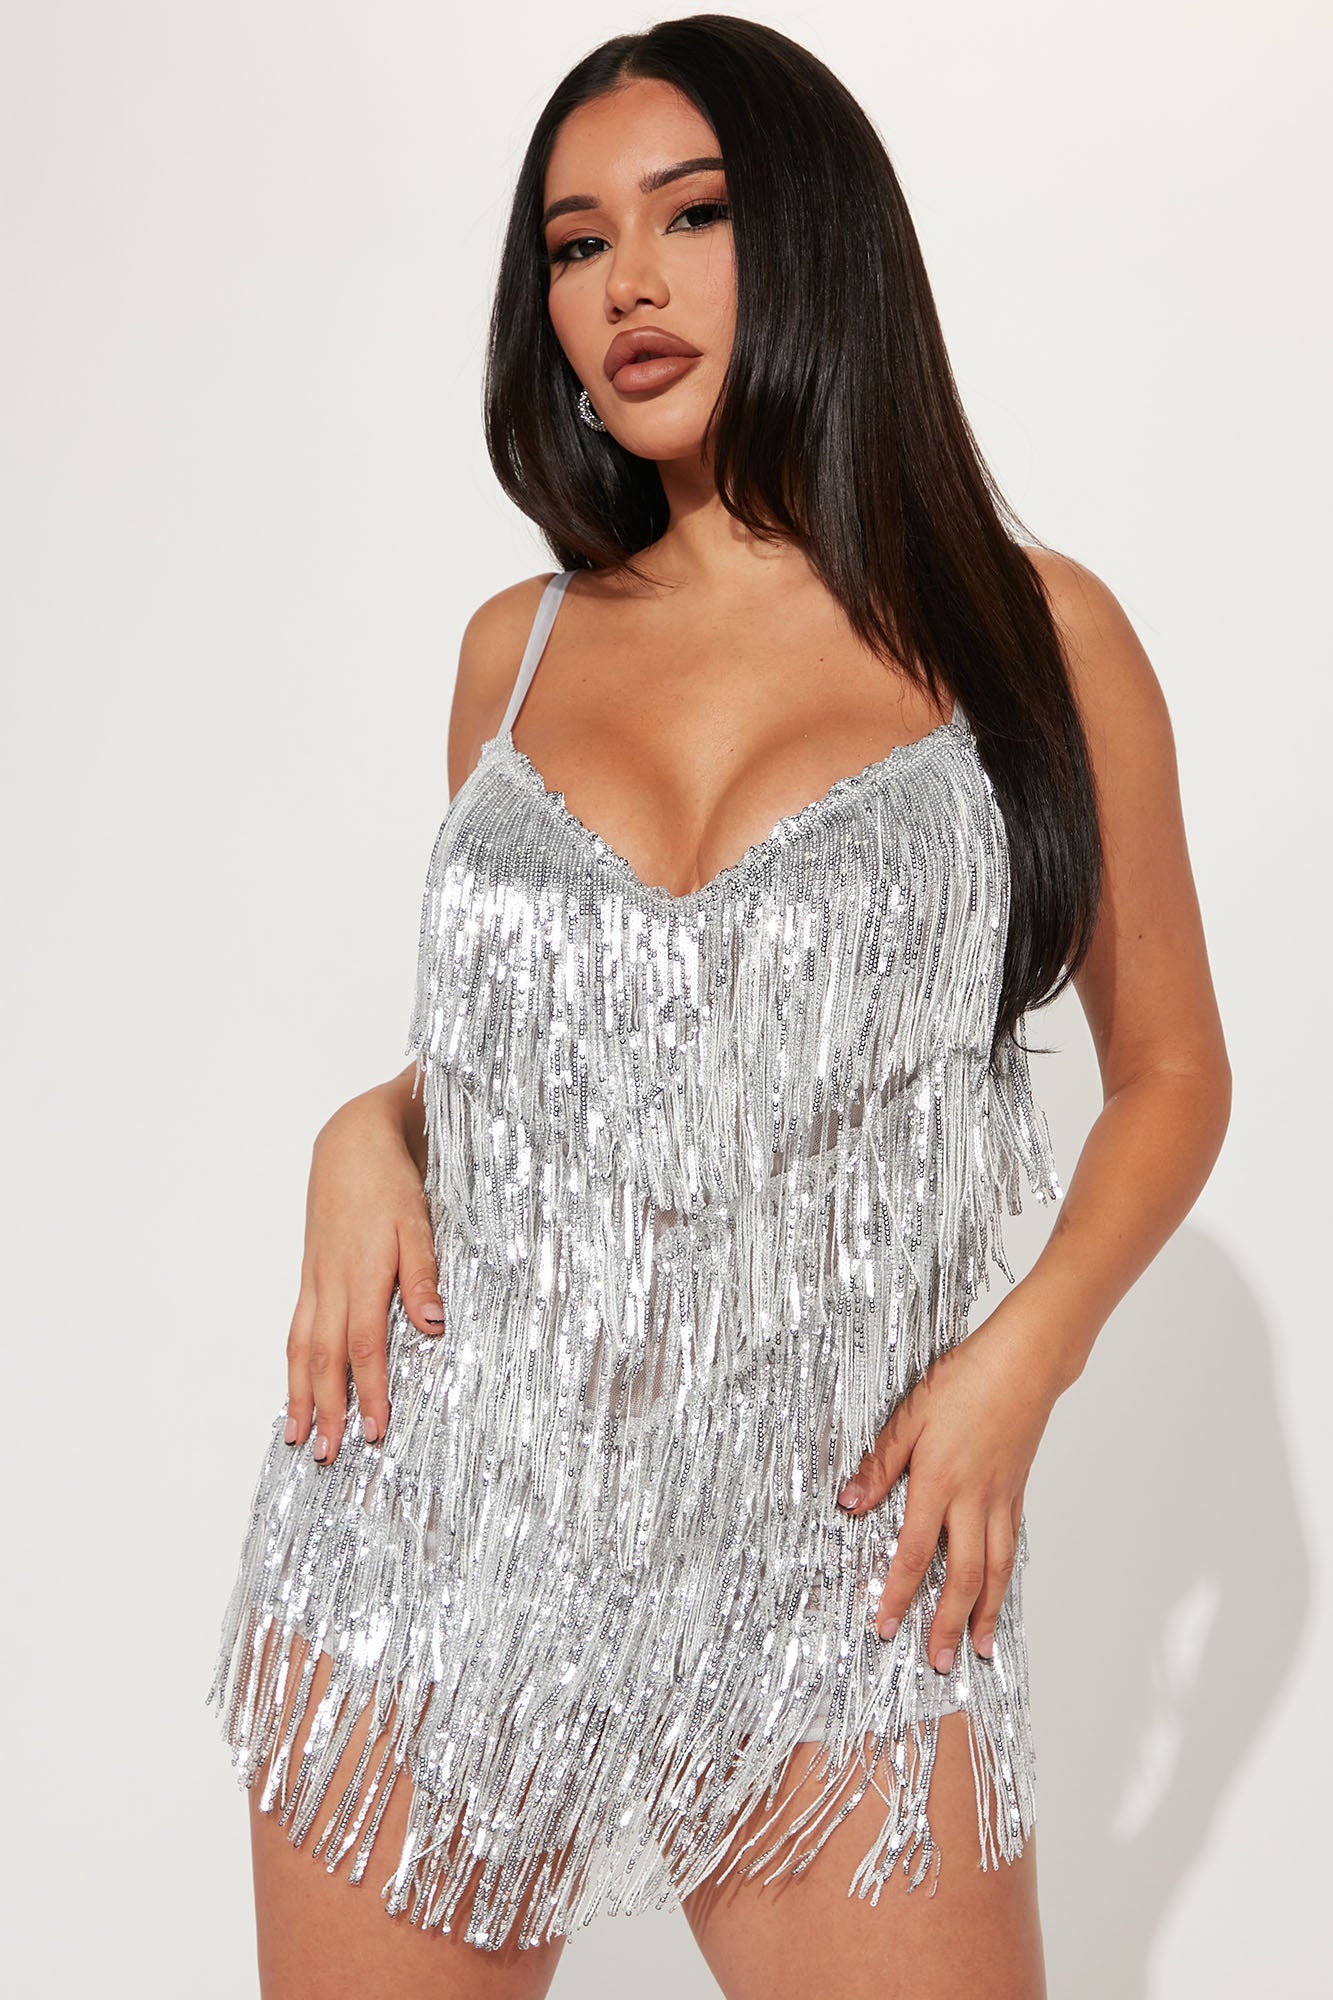 Sparkly Silver Fringe Mini Dress - Party Dresses